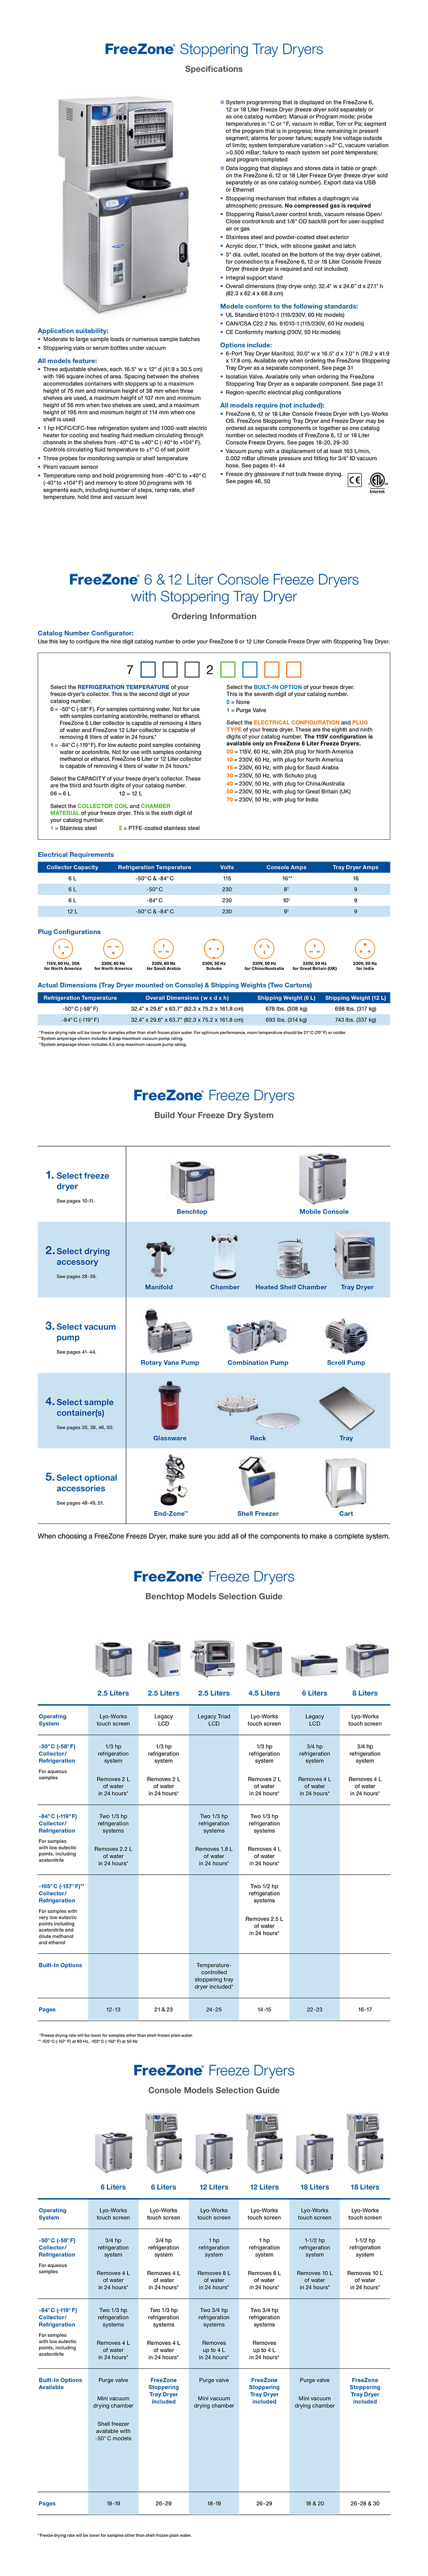 a08 6 & 12 Liter Console Freeze Dryers_01.jpg